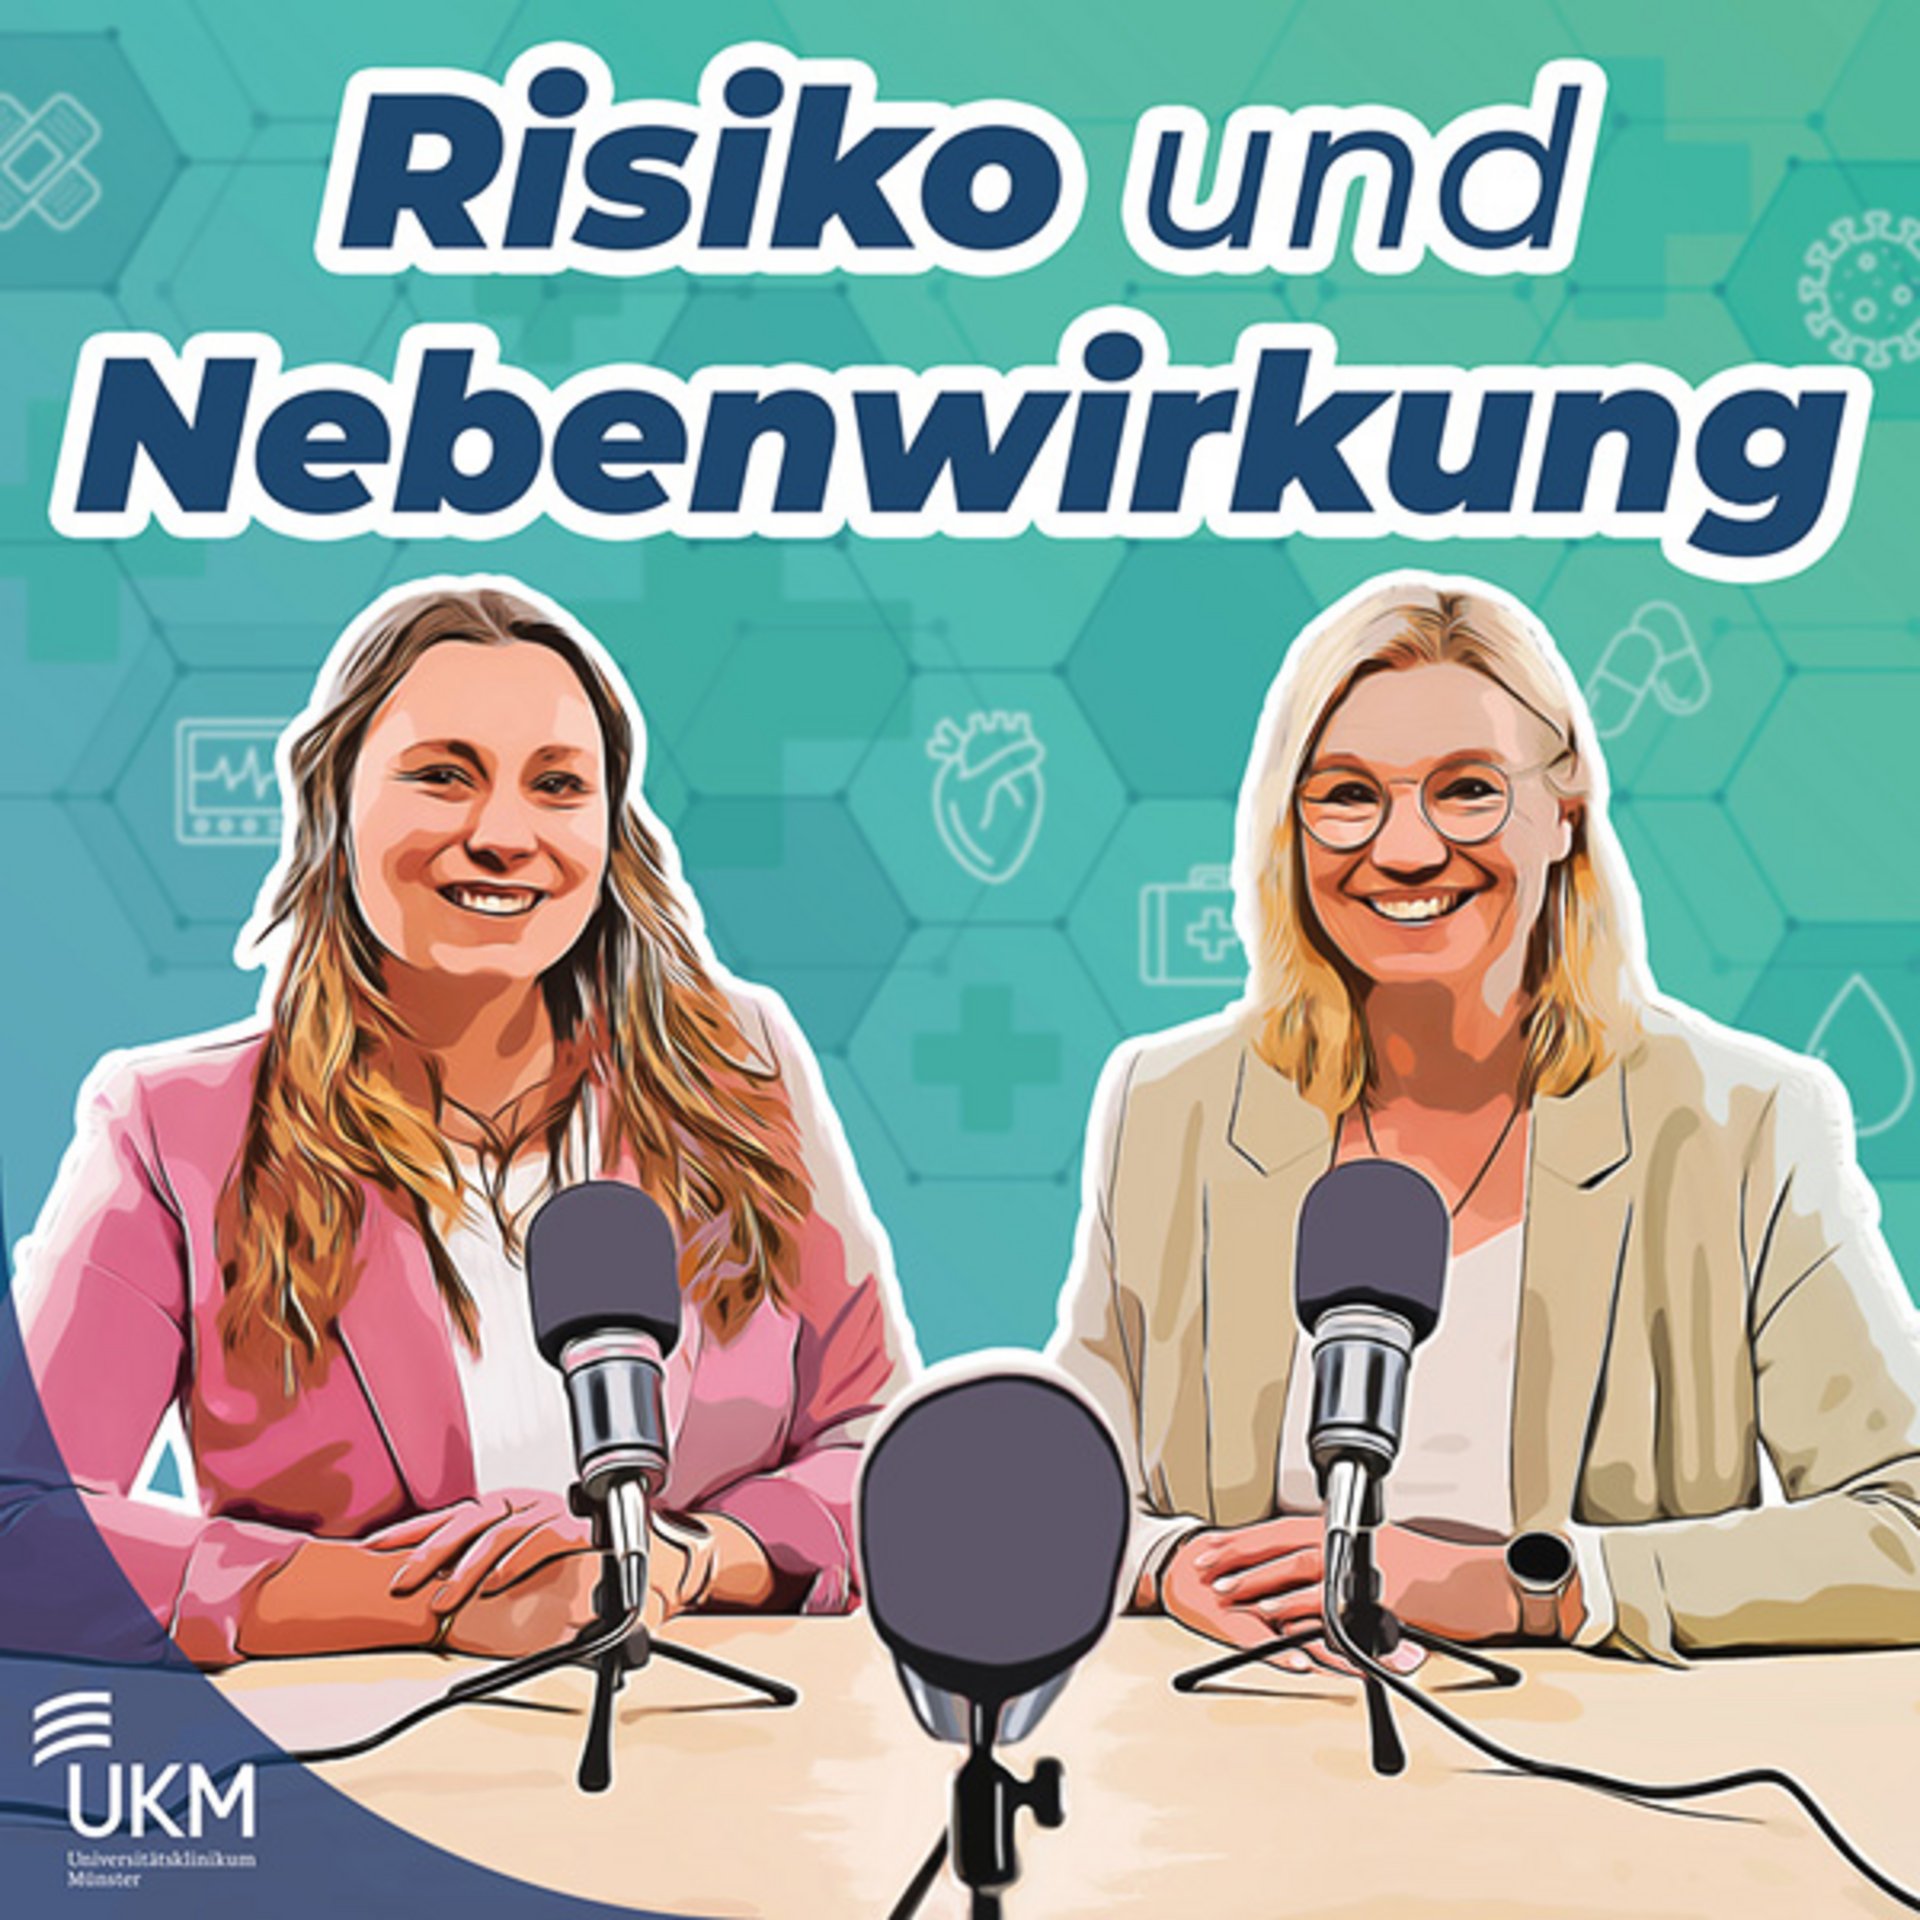 UKM Podcast | Risiko und Nebenwirkung